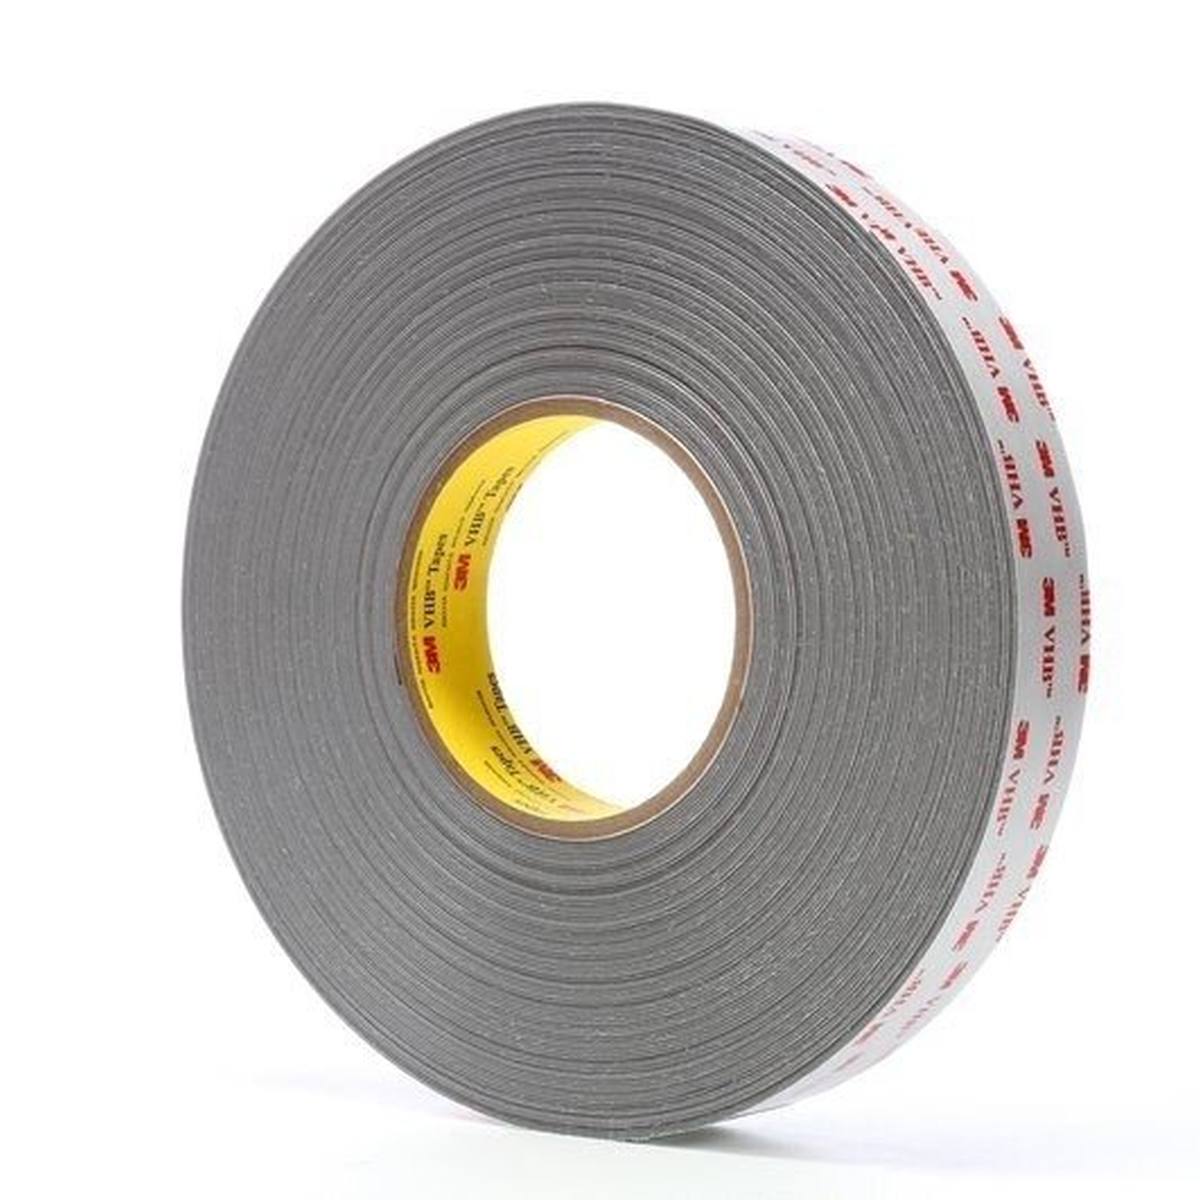 3M VHB Adhesive tape RP 25P, grey, 6 mm x 66 m, 0.6 mm